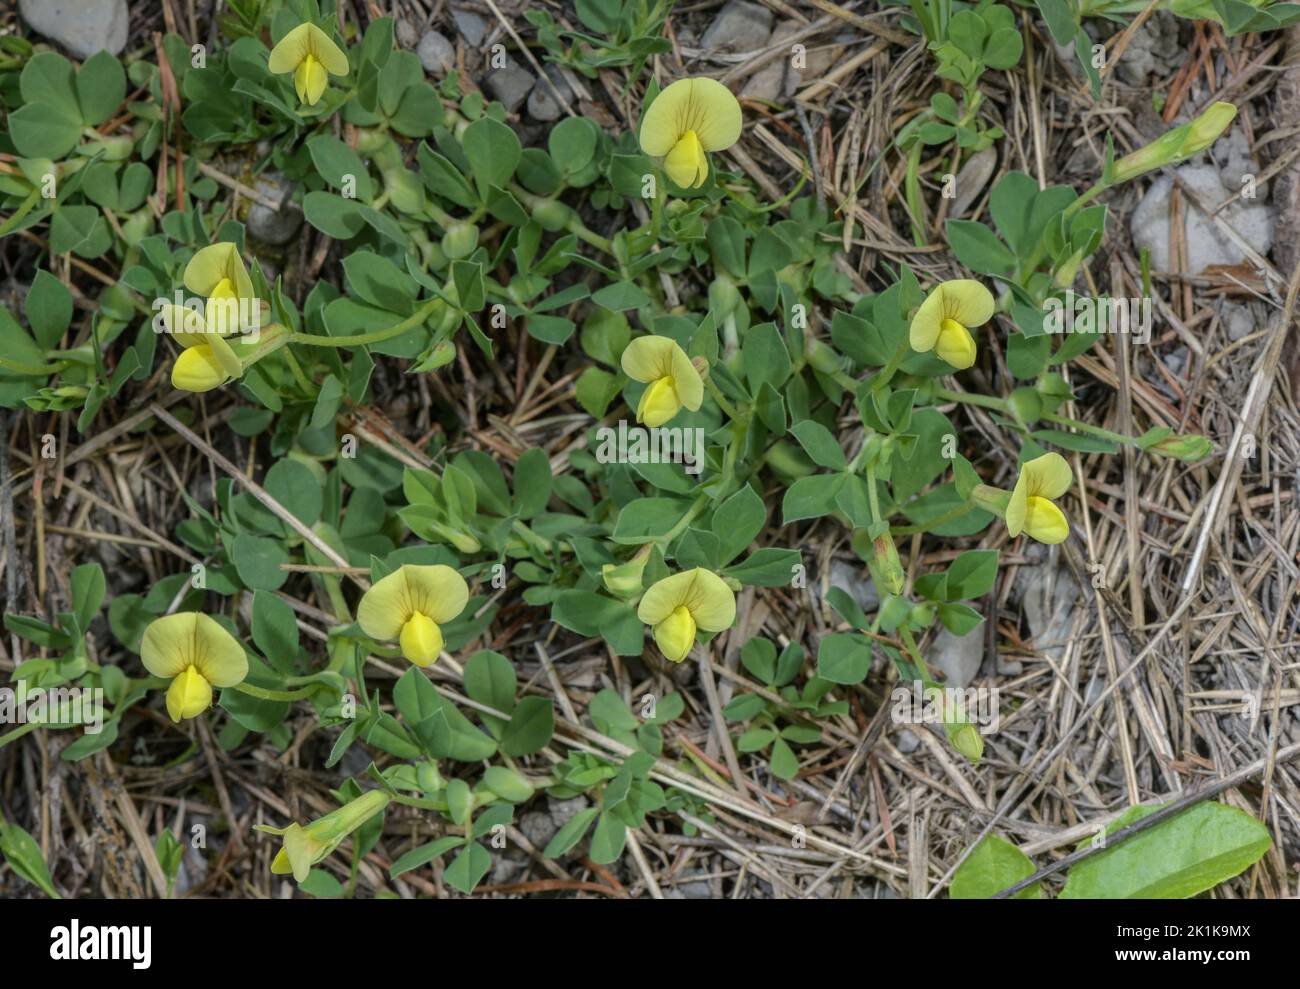 Dragon’s Teeth, Lotus maritimus, in flower in grassland. Stock Photo